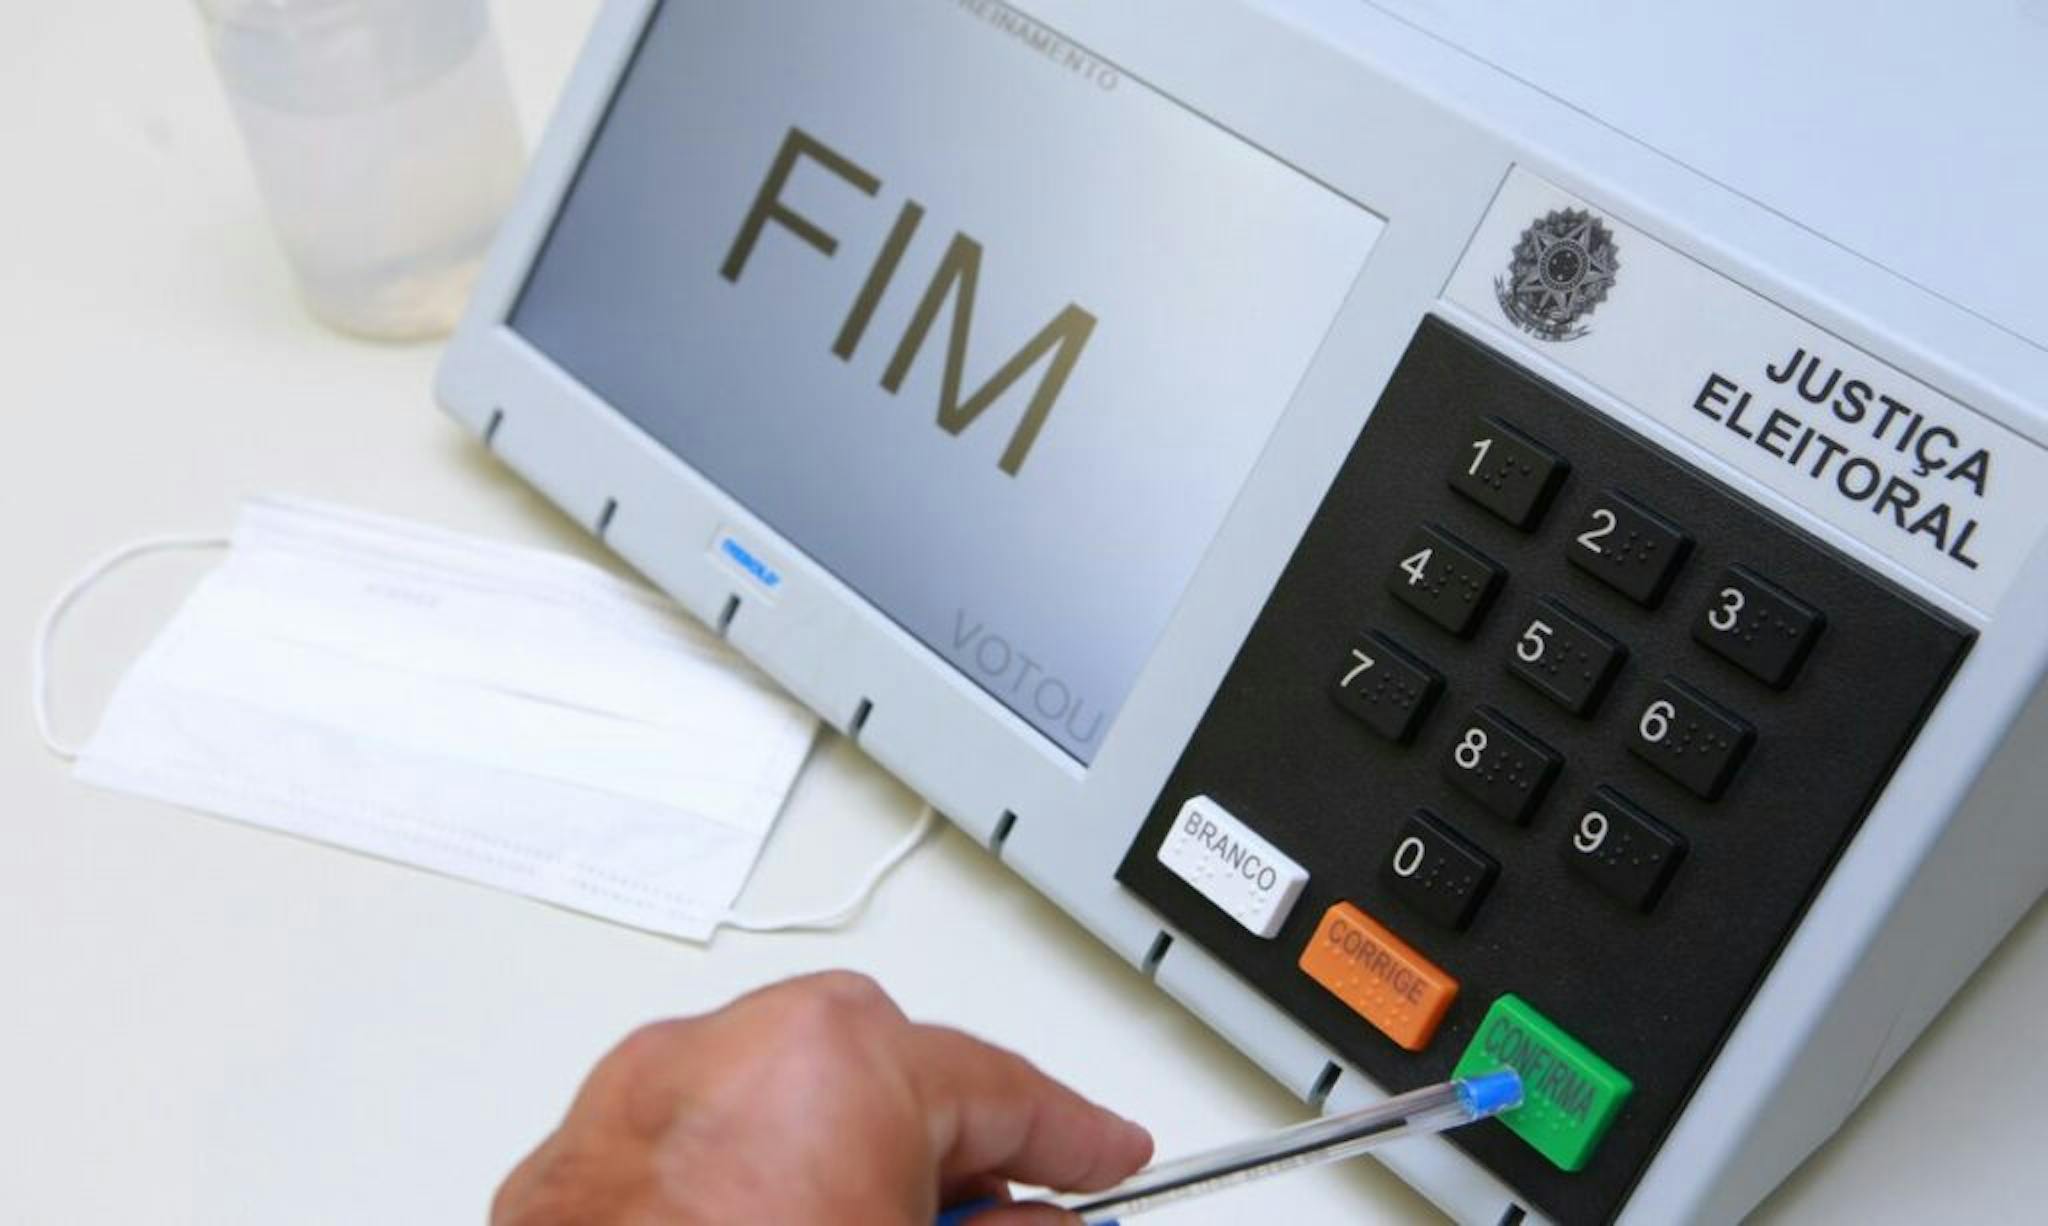 Electronic voting machines used in Brazilian elections. Image courtesy of Tribunal Superior Eleitoral (TSE).